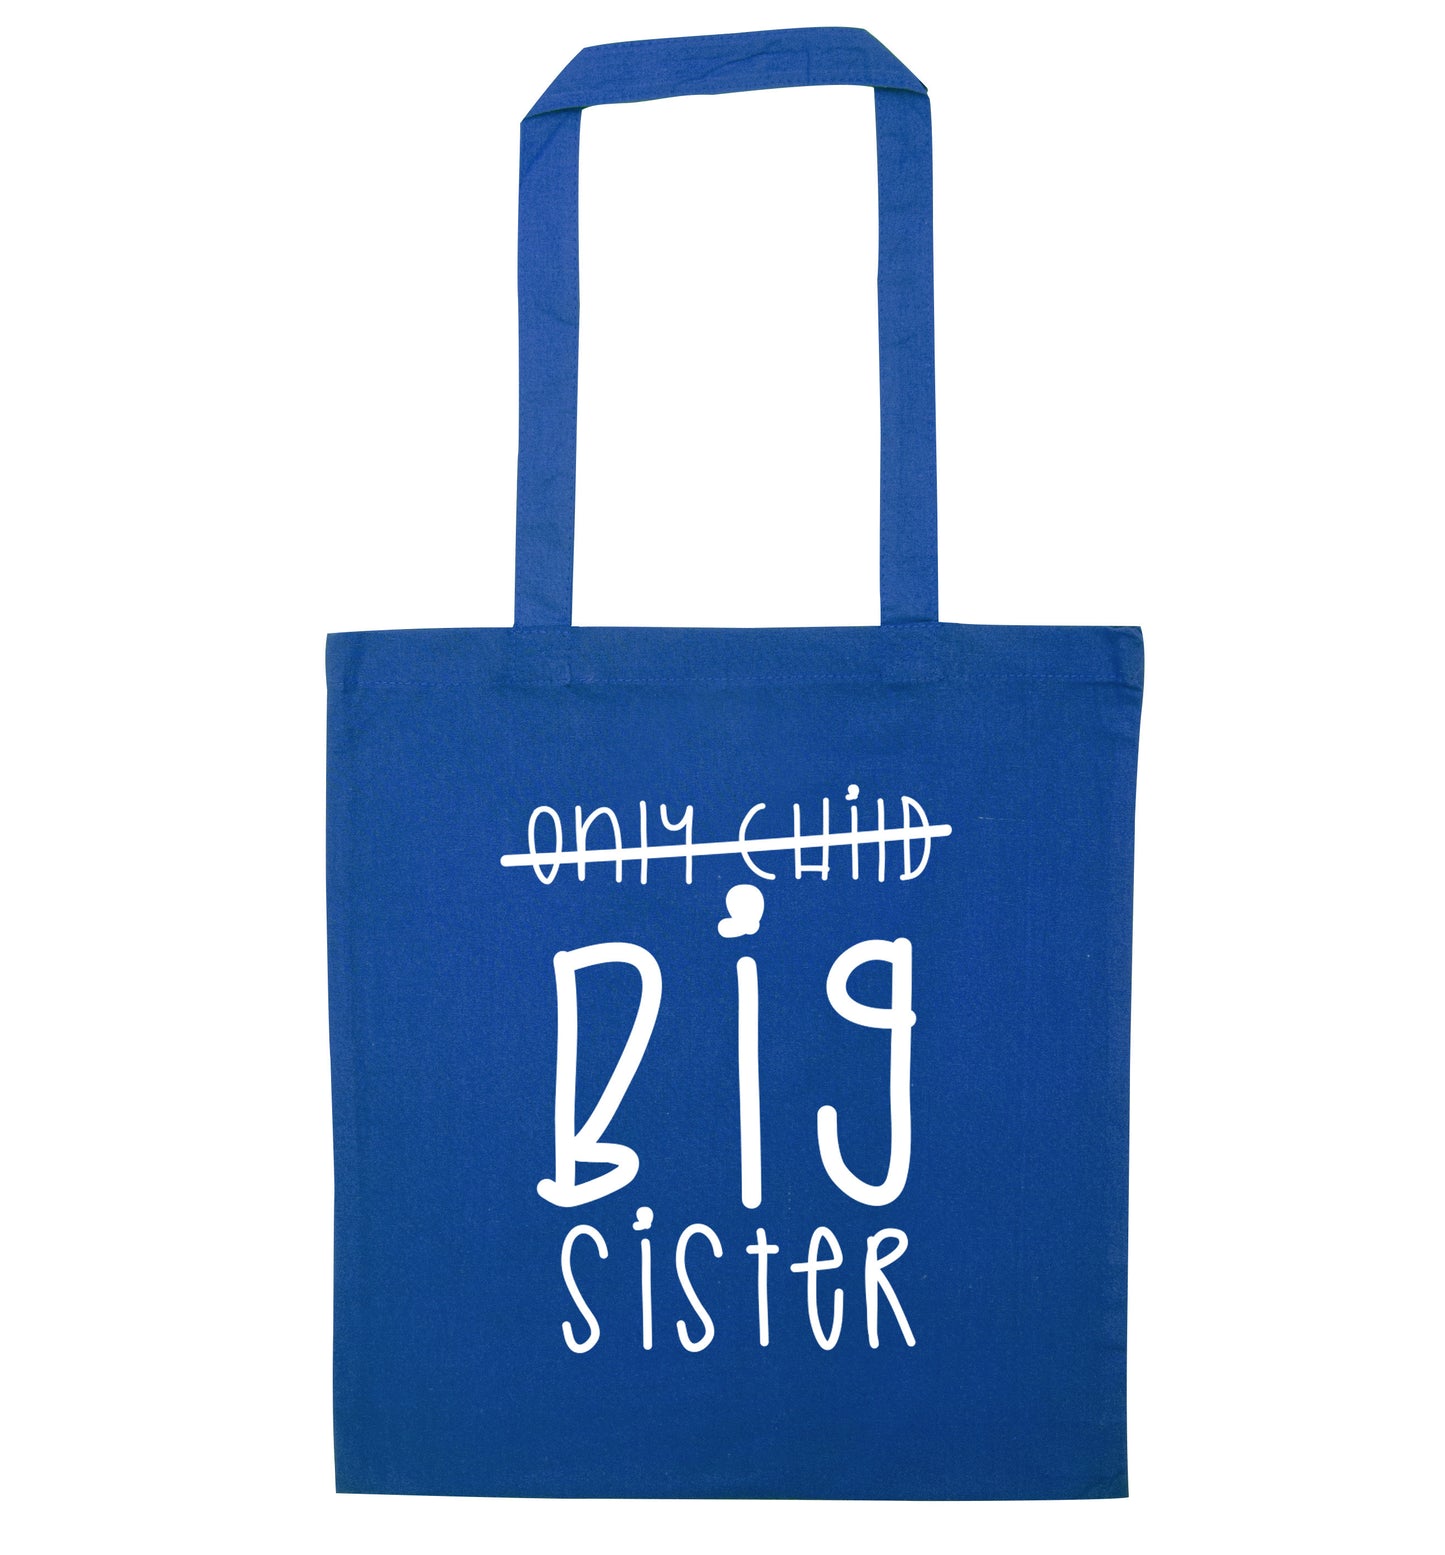 Only child big sister blue tote bag